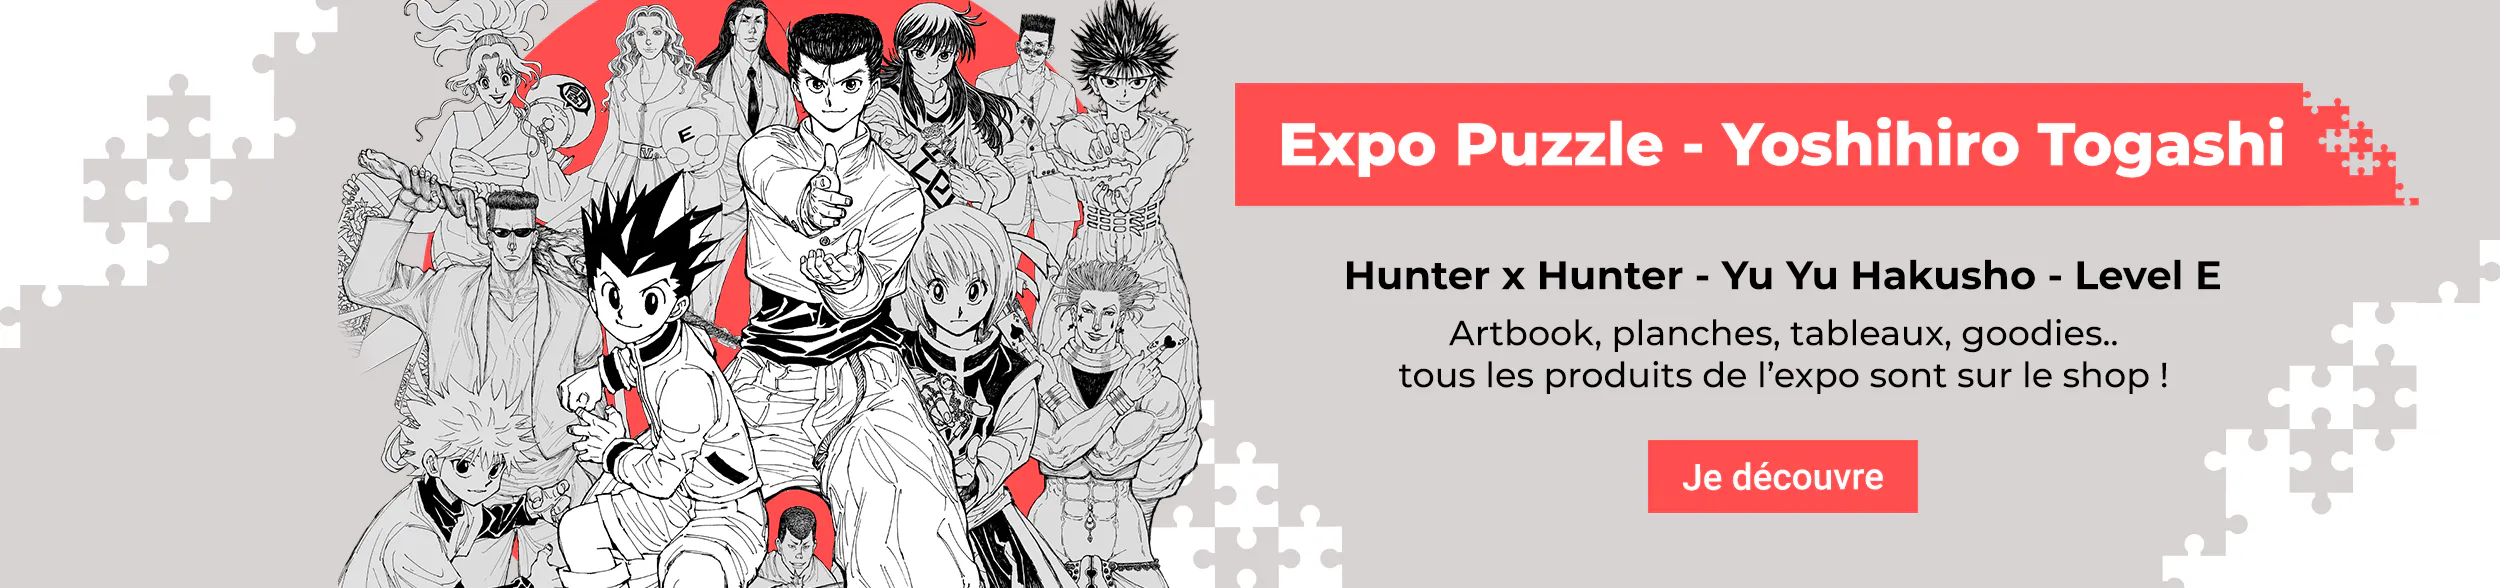 Artbooks, planches, figurines, goodies, manga et exposition officielle Hunter x Hunter et Yu Yu Hakusho !